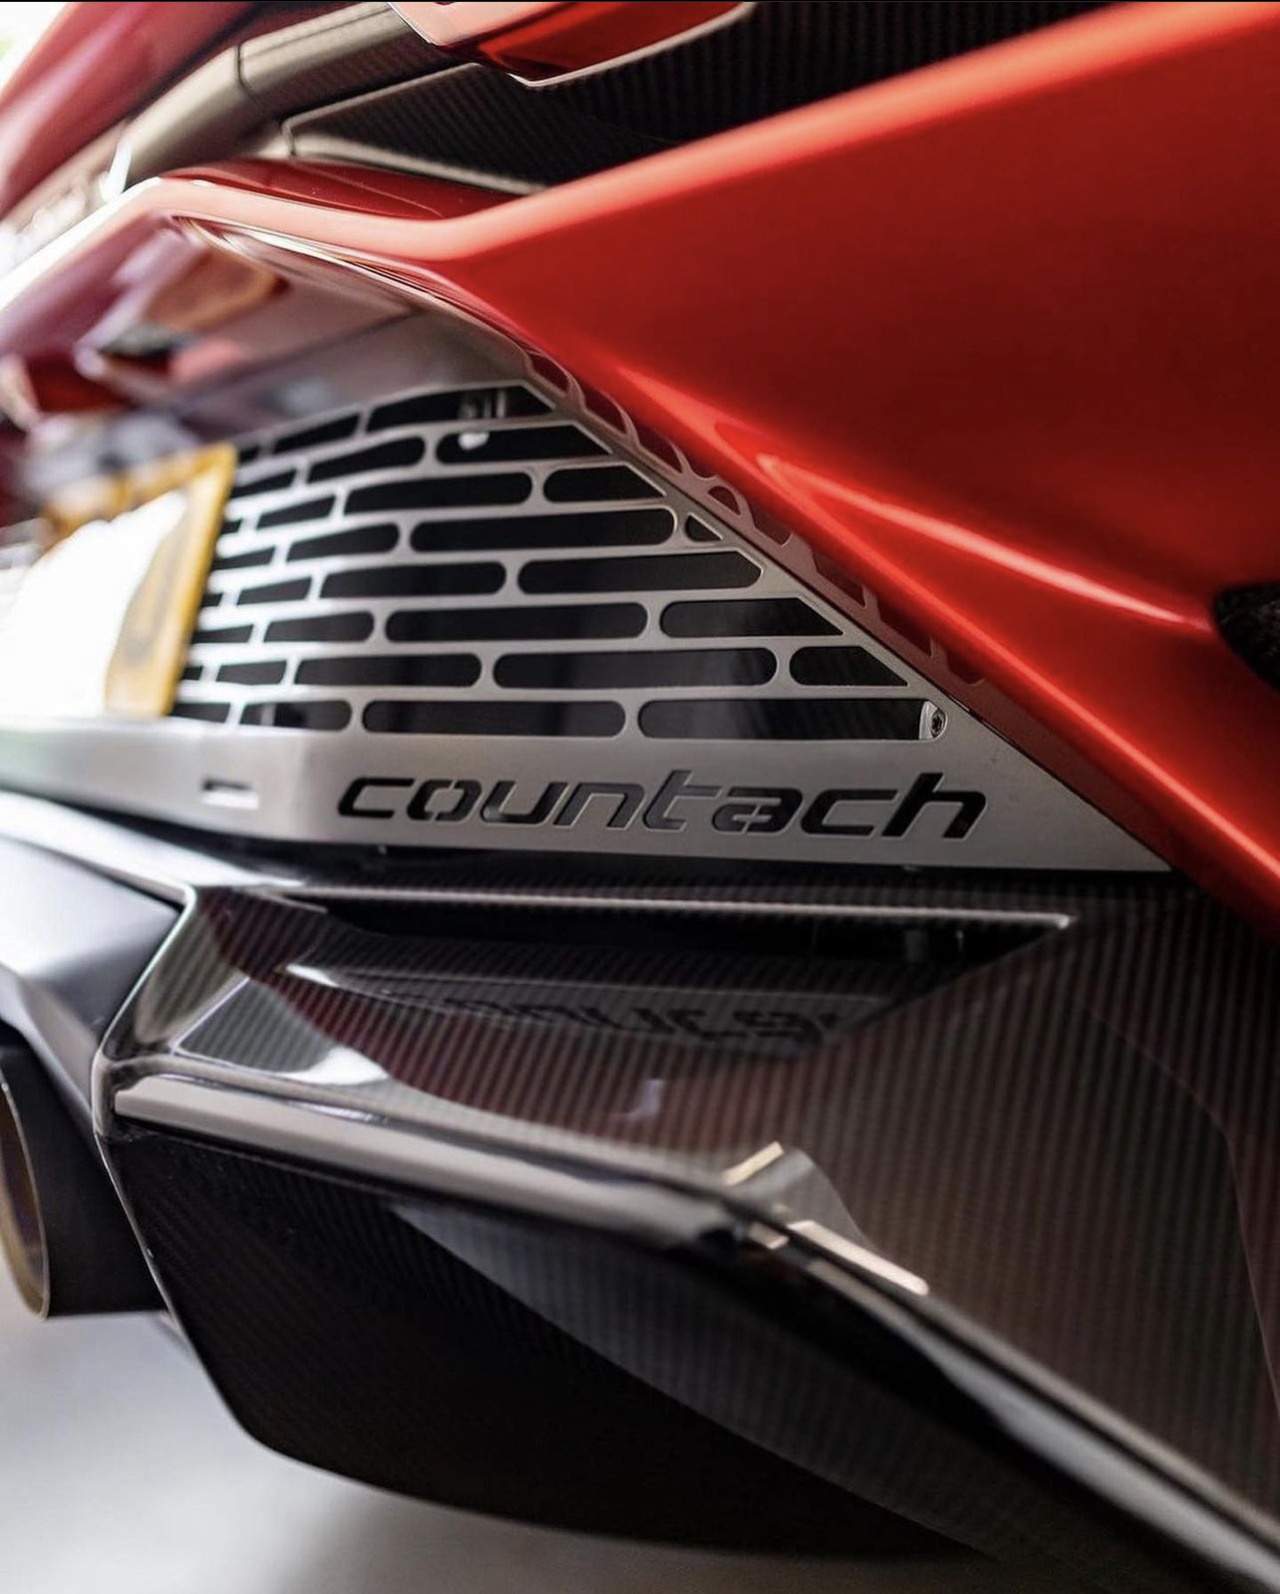 mccliningray26-blog:Lamborghini Countach candy apple red ❤️🖤❤️